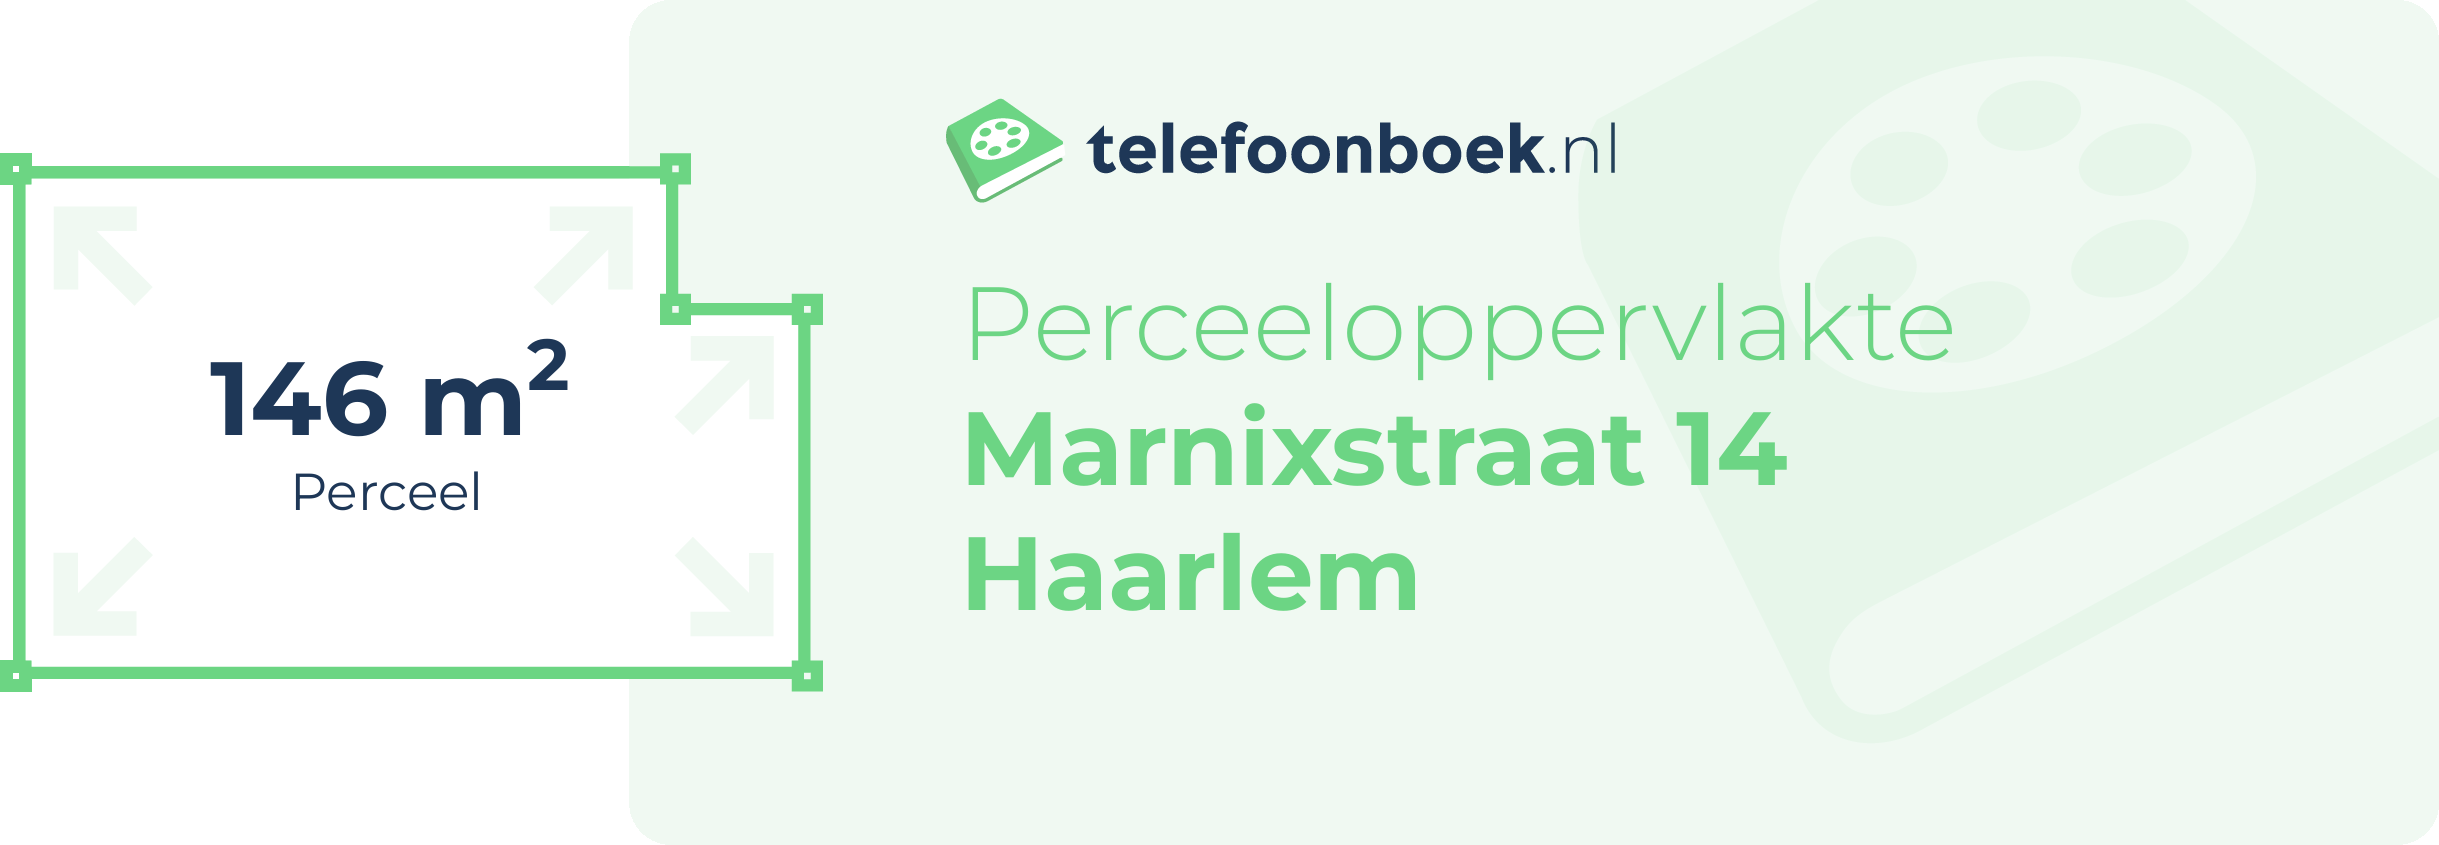 Perceeloppervlakte Marnixstraat 14 Haarlem